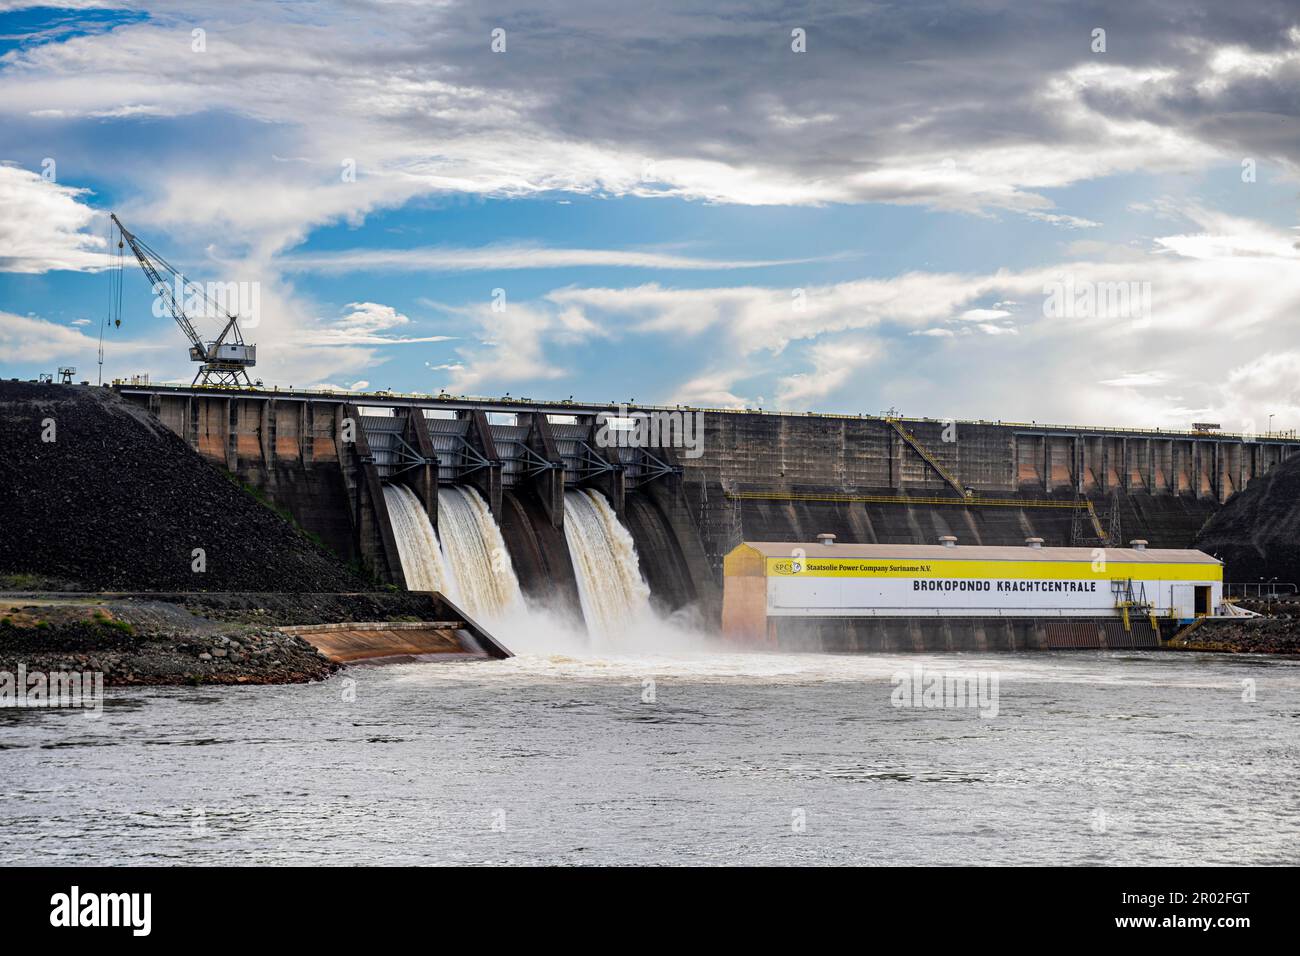 Brokopondo Krachtcentrale, hydroelectric power plant, Suriname Stock Photo